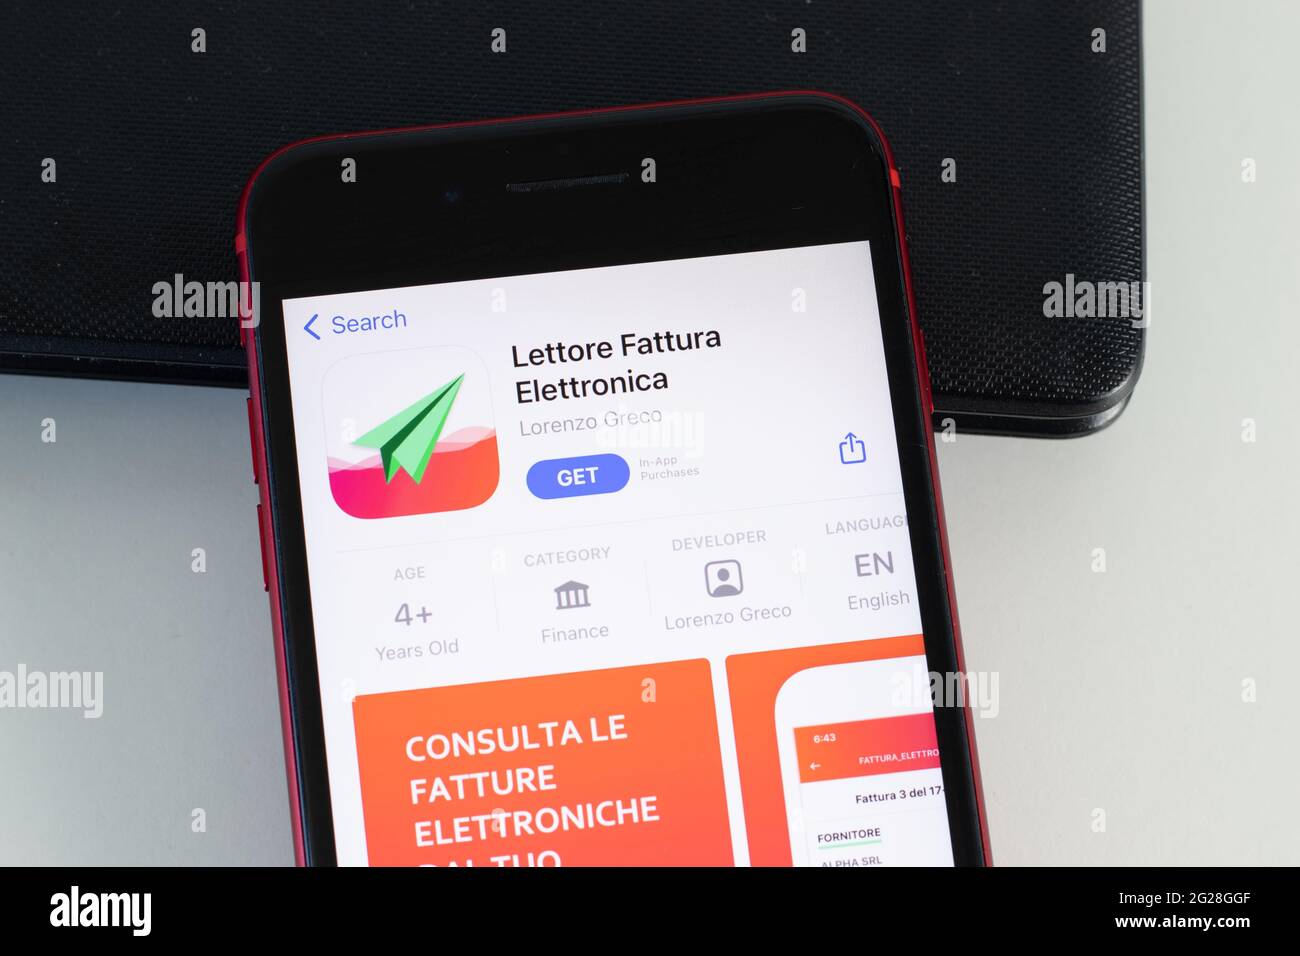 New York, USA - 1 June 2021: Lettore Fattura Elettronica mobile app logo on phone screen, close-up icon, Illustrative Editorial Stock Photo